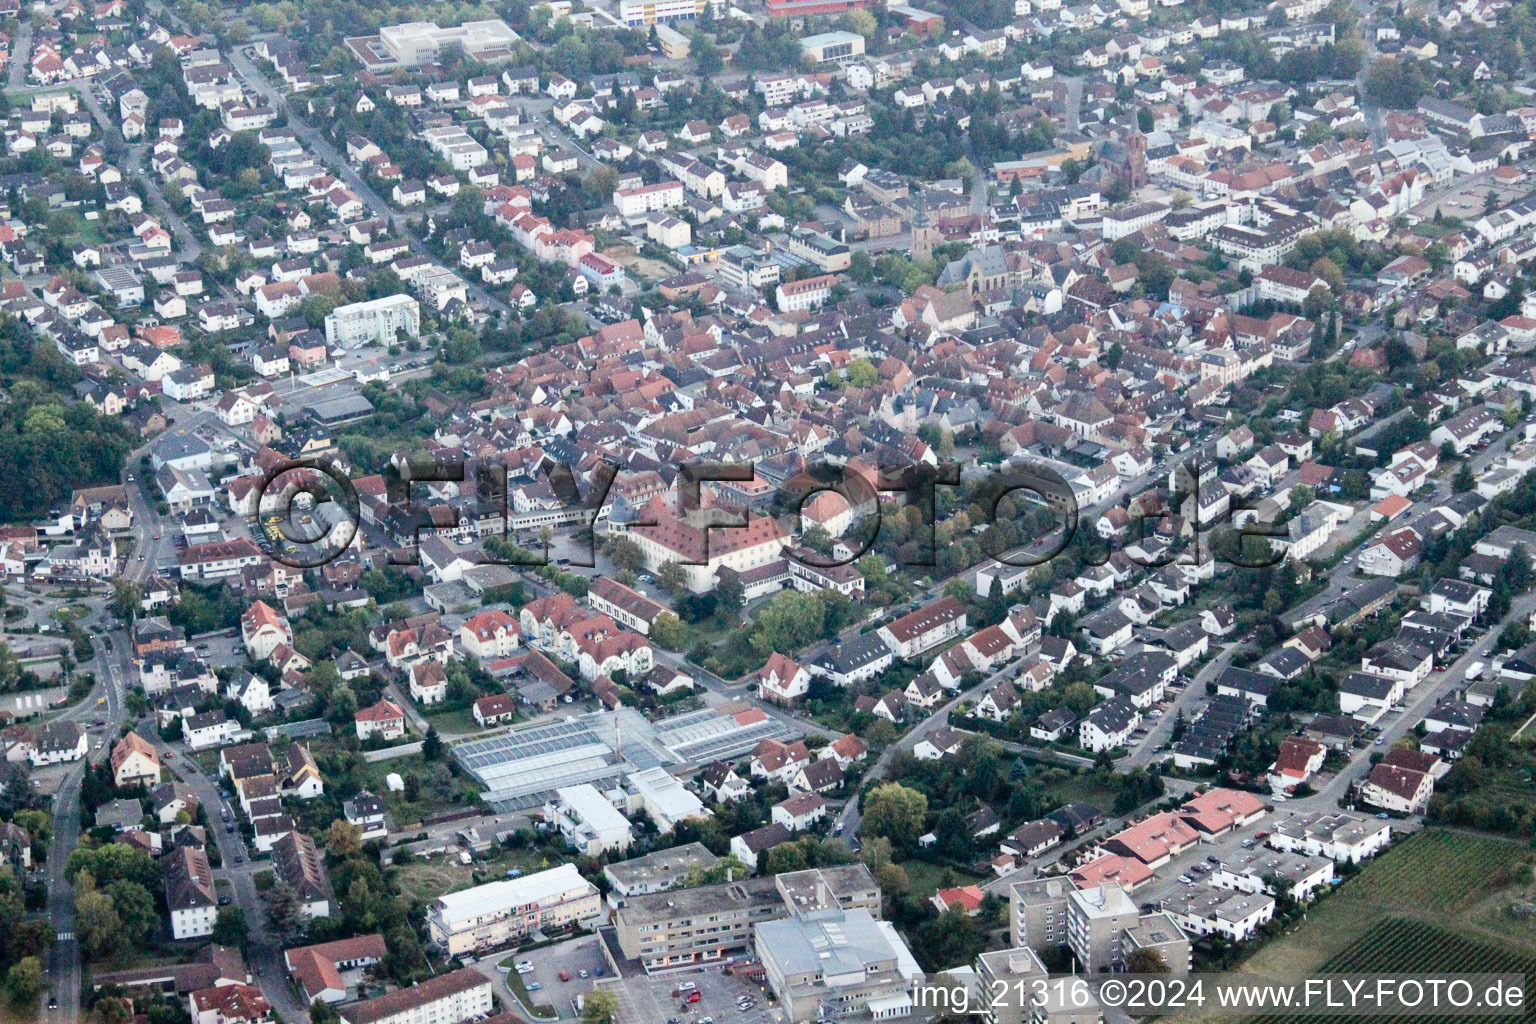 Drone image of Bad Bergzabern in the state Rhineland-Palatinate, Germany